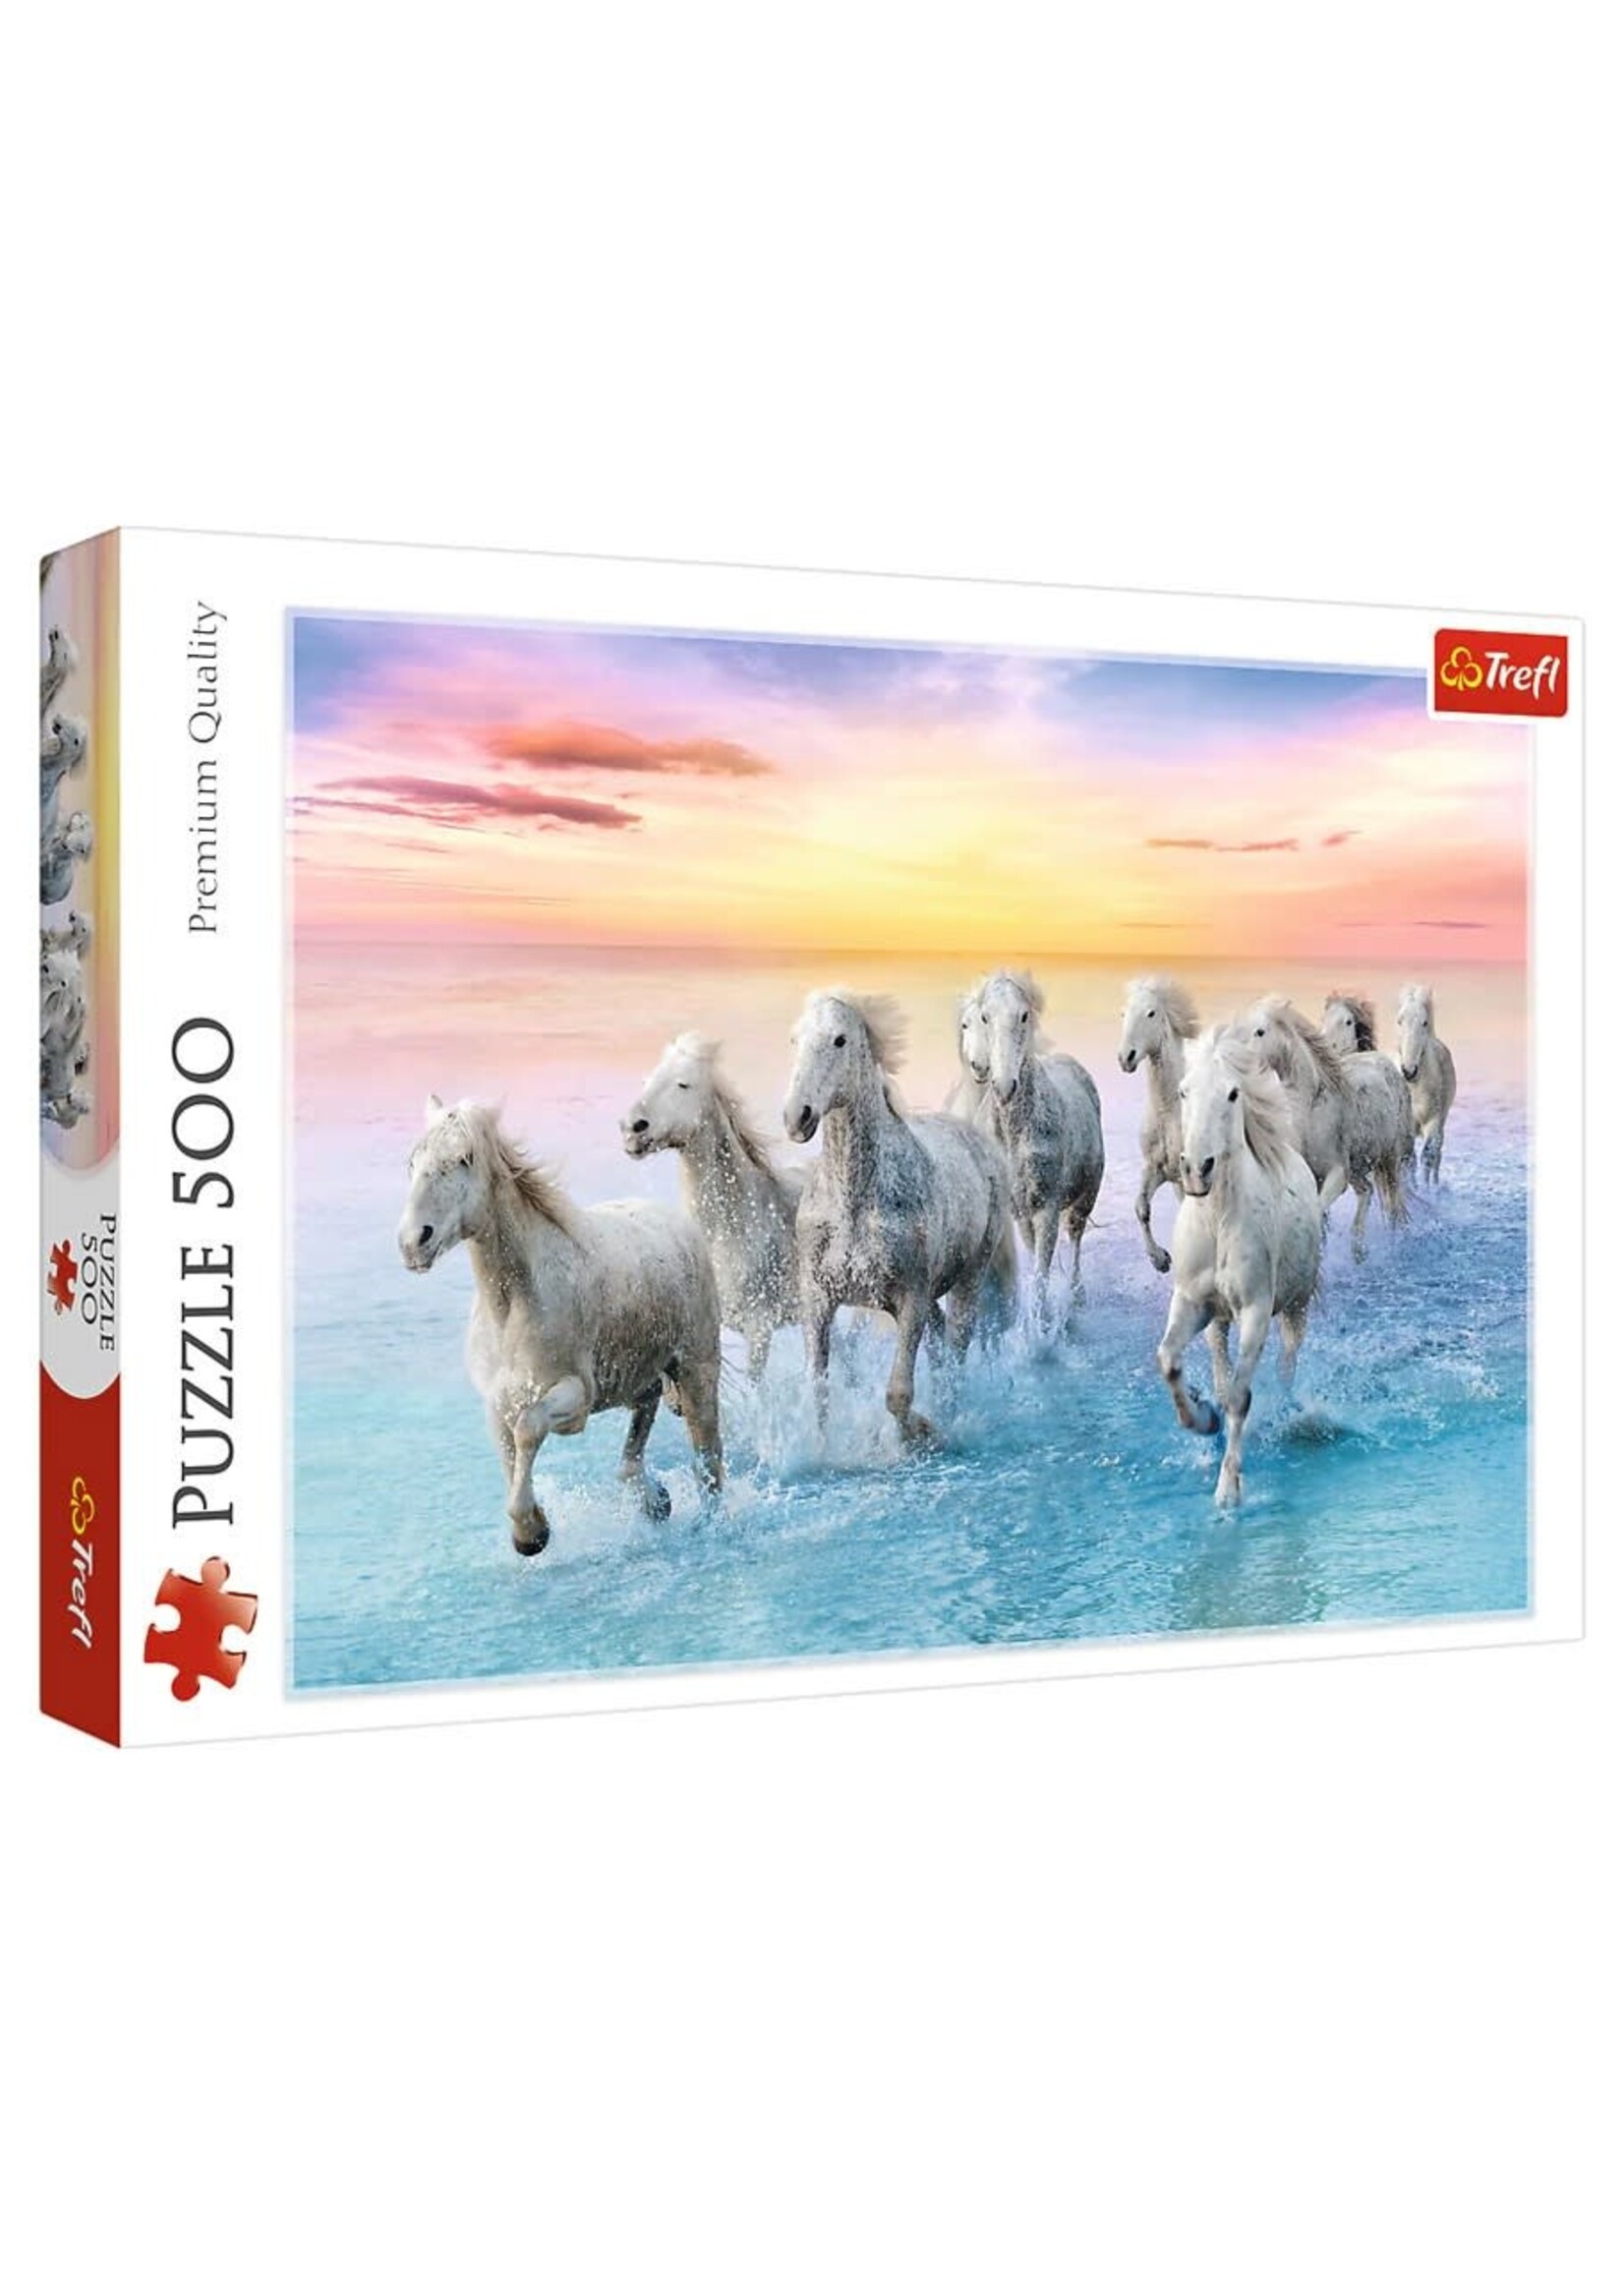 Trefl Puzzle: Galloping White Horses 500pc